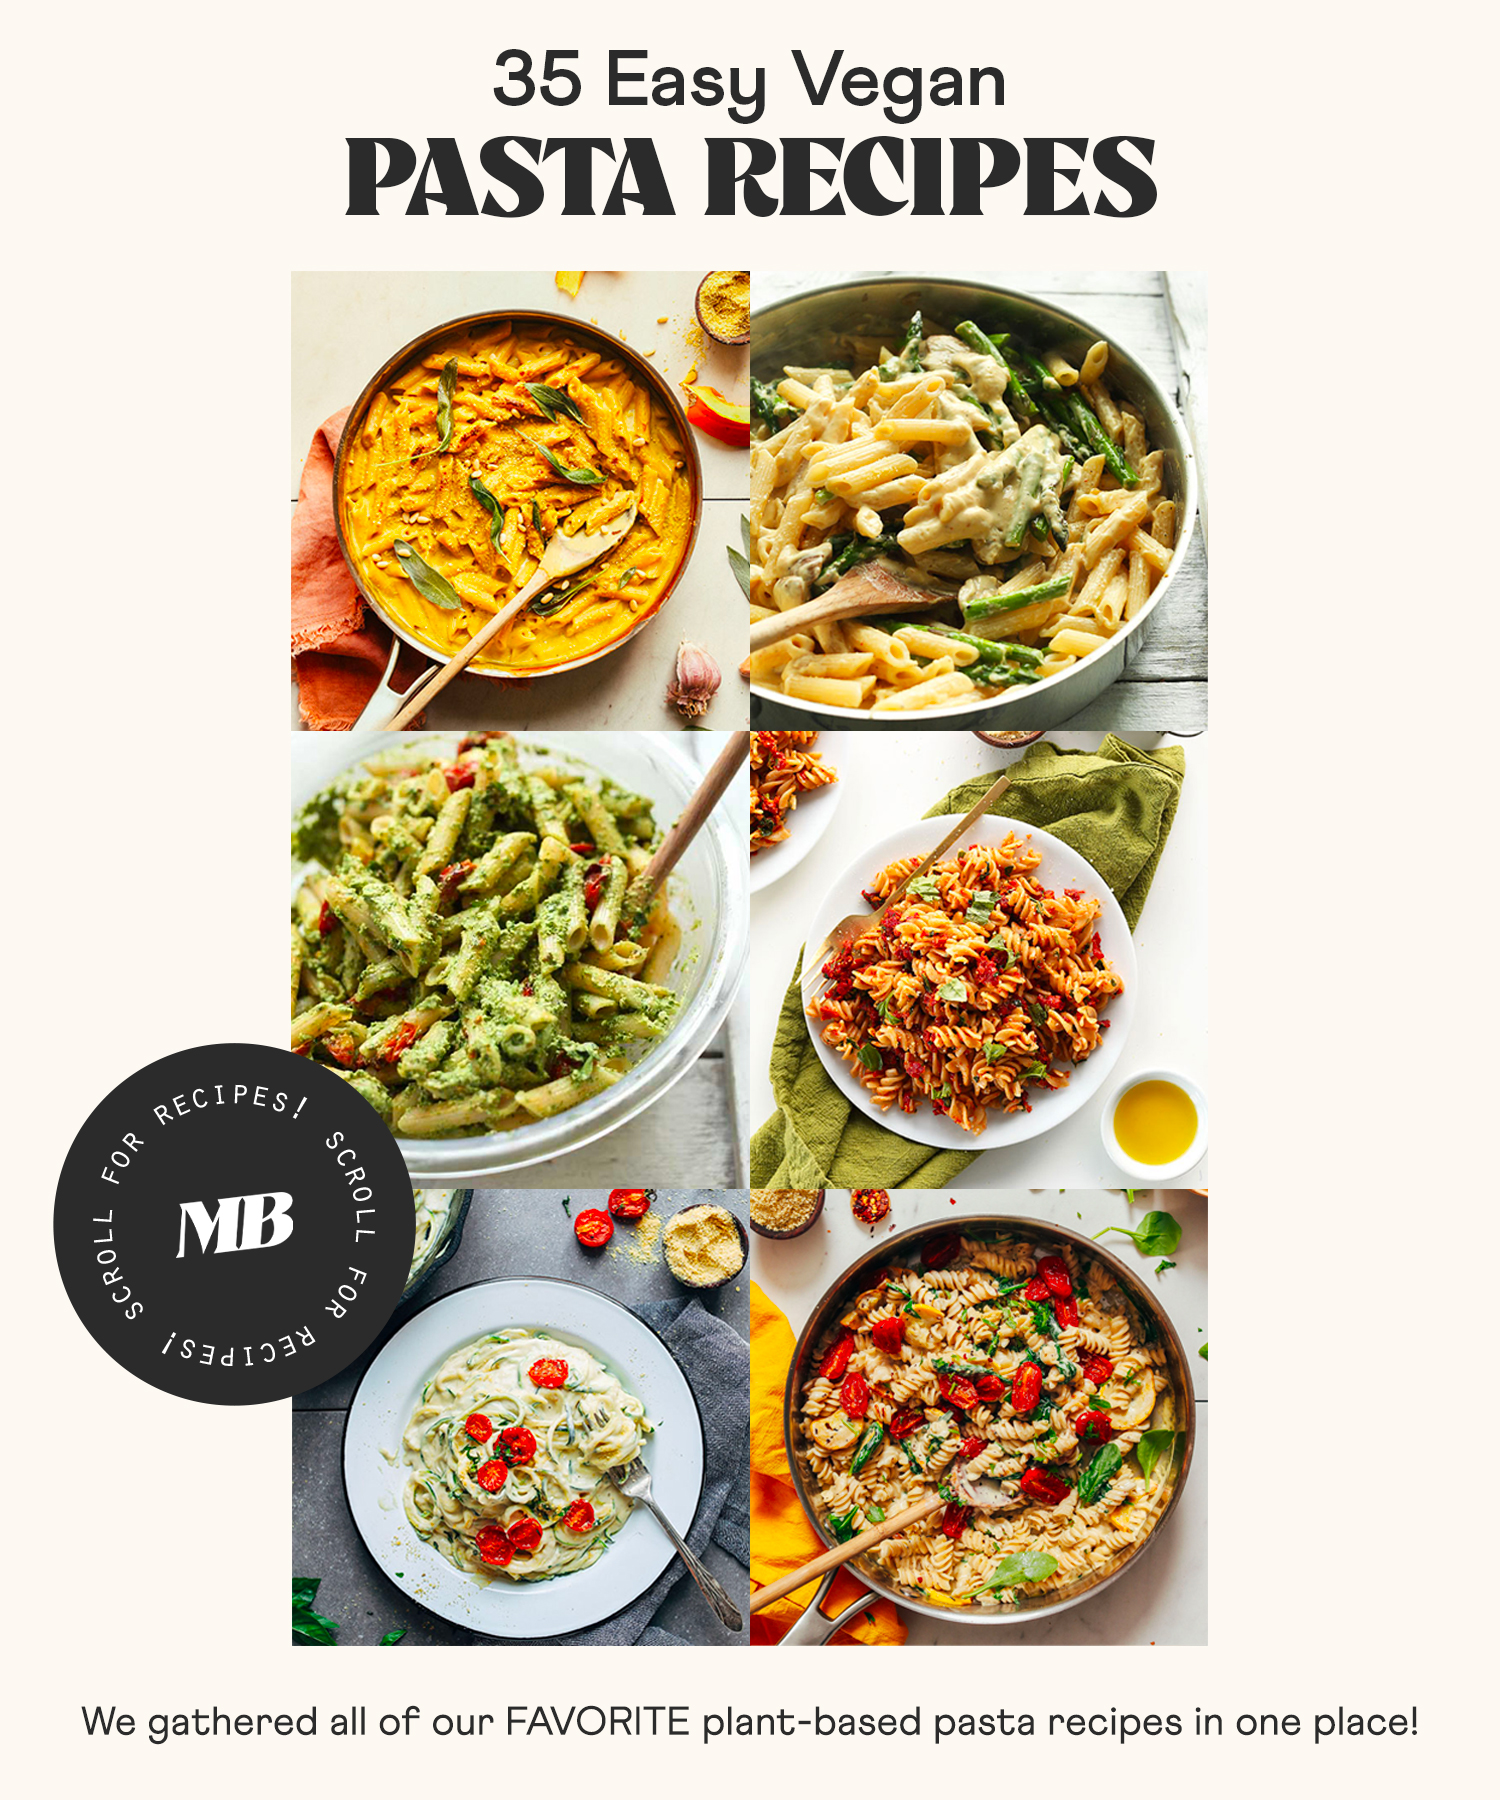 Pumpkin pasta, pesto pasta, and other easy vegan pasta recipes